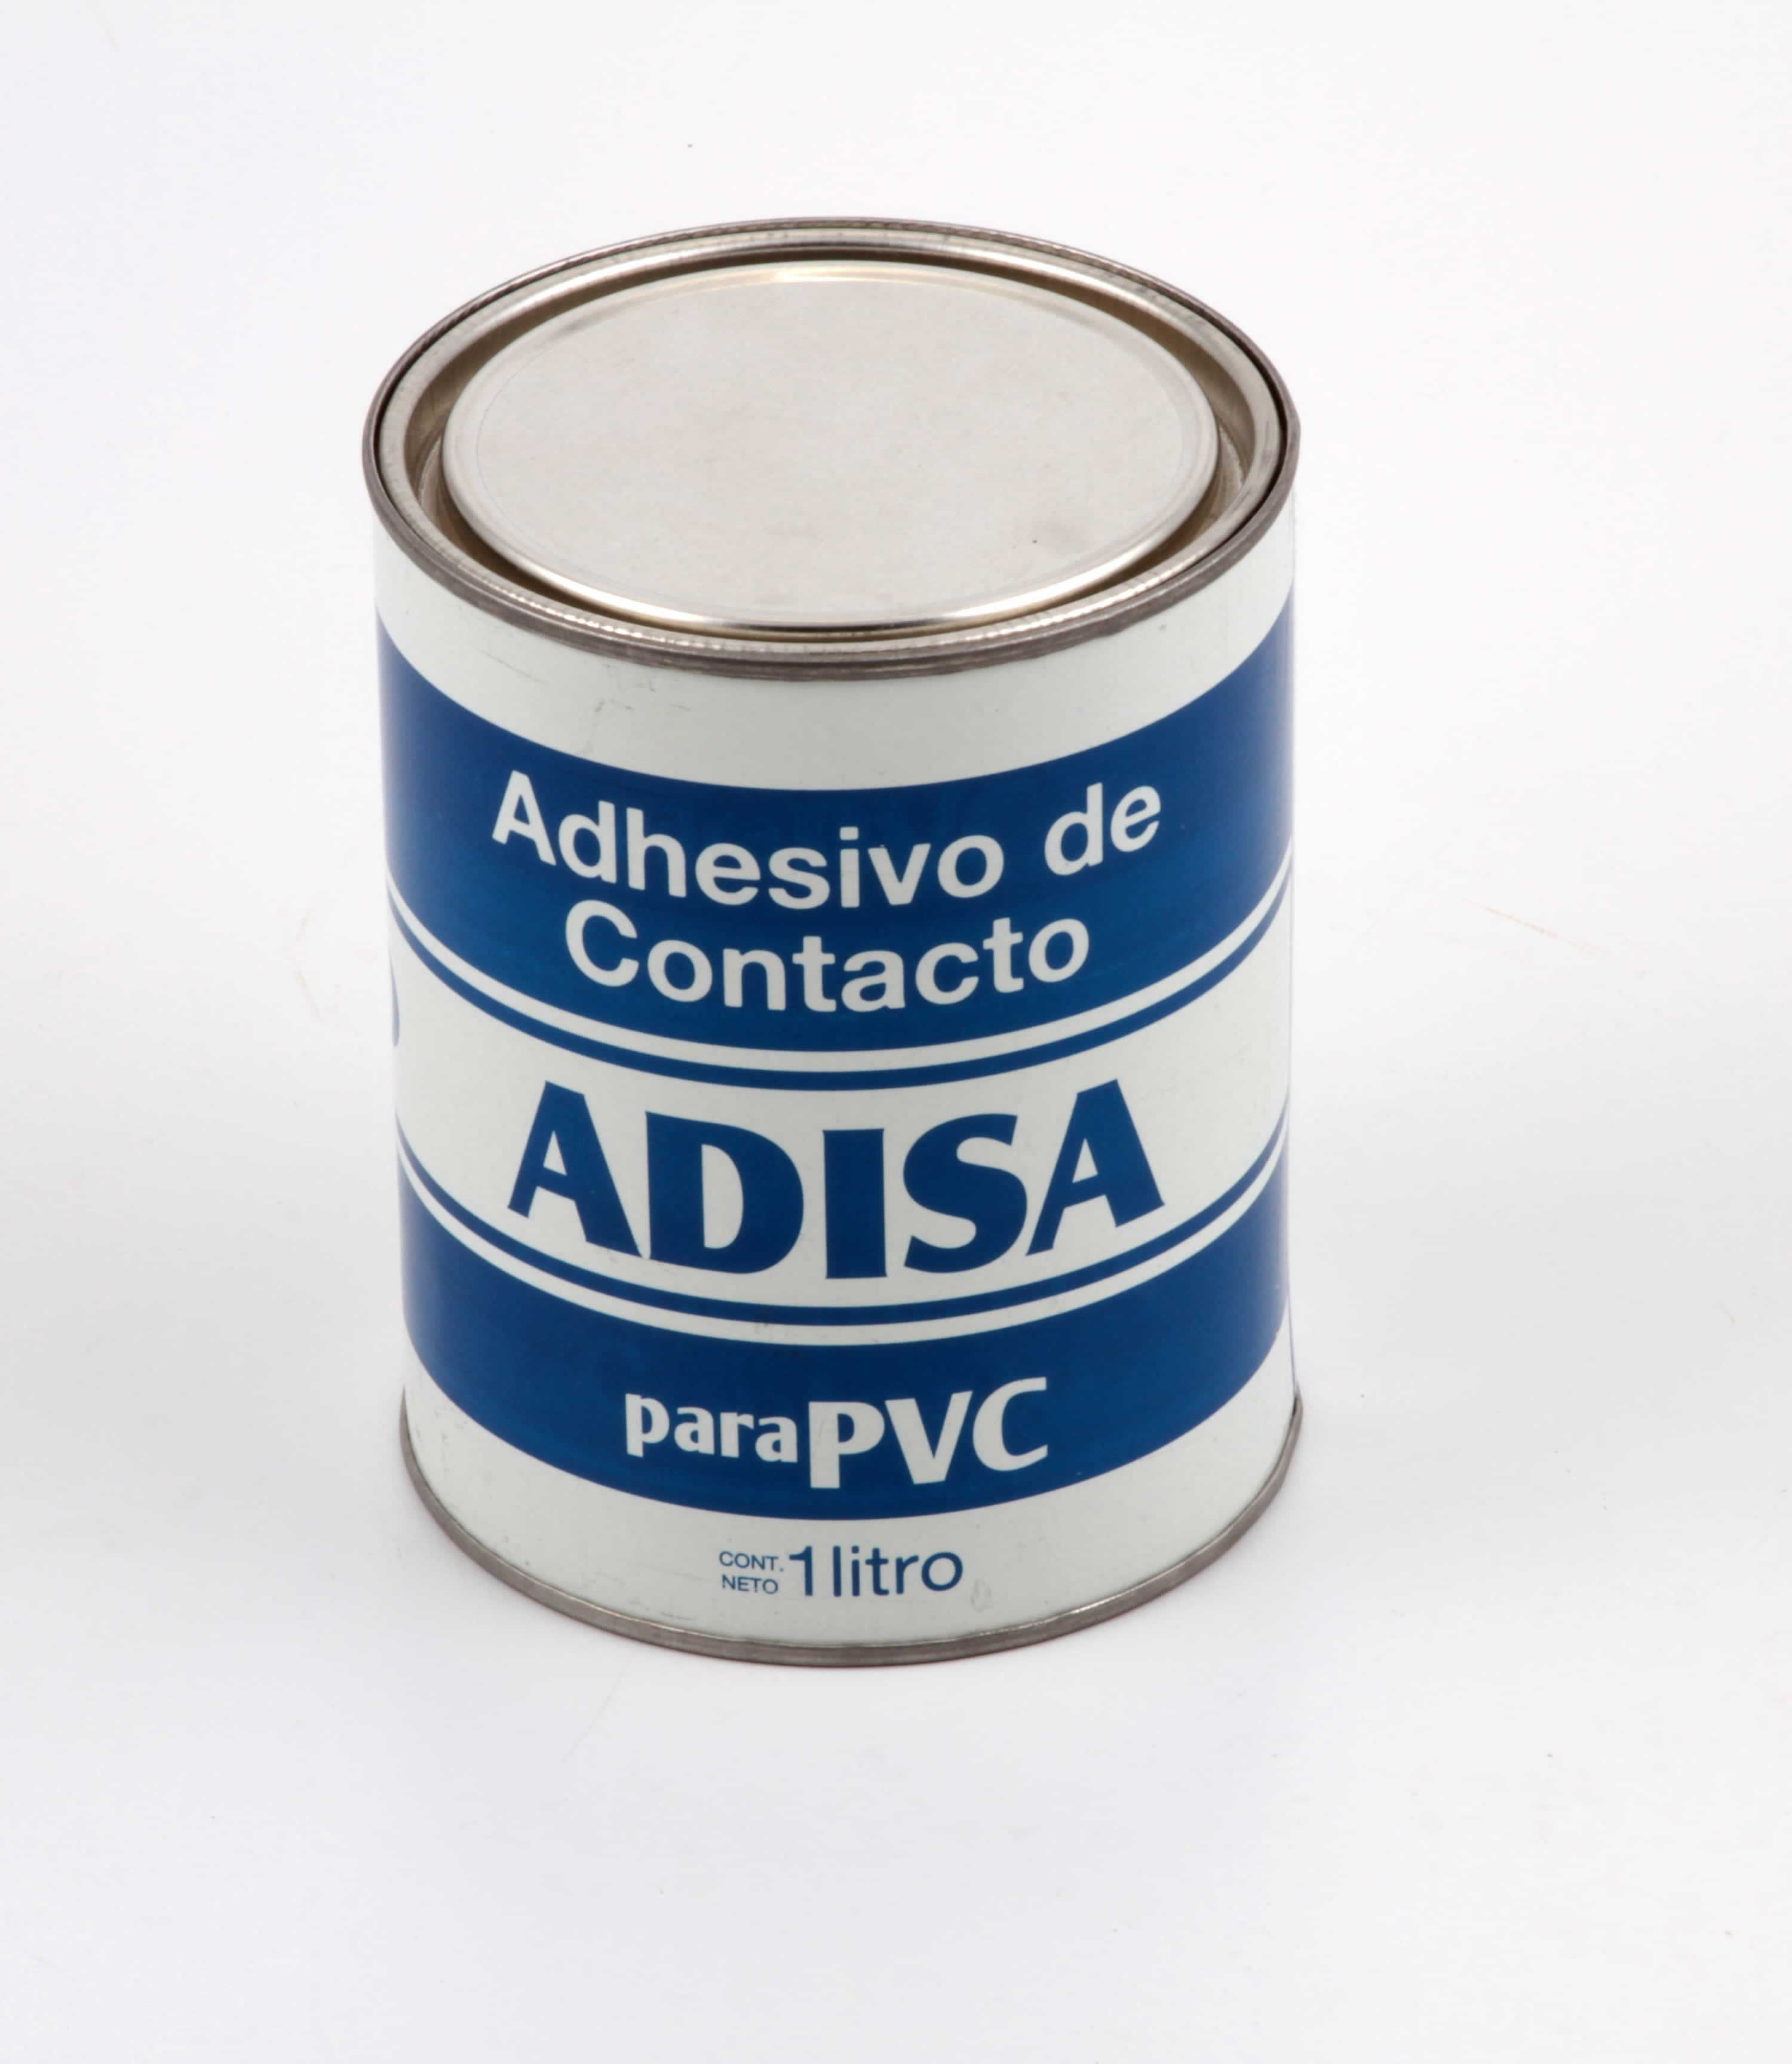 Adisa - Para PVC blando.